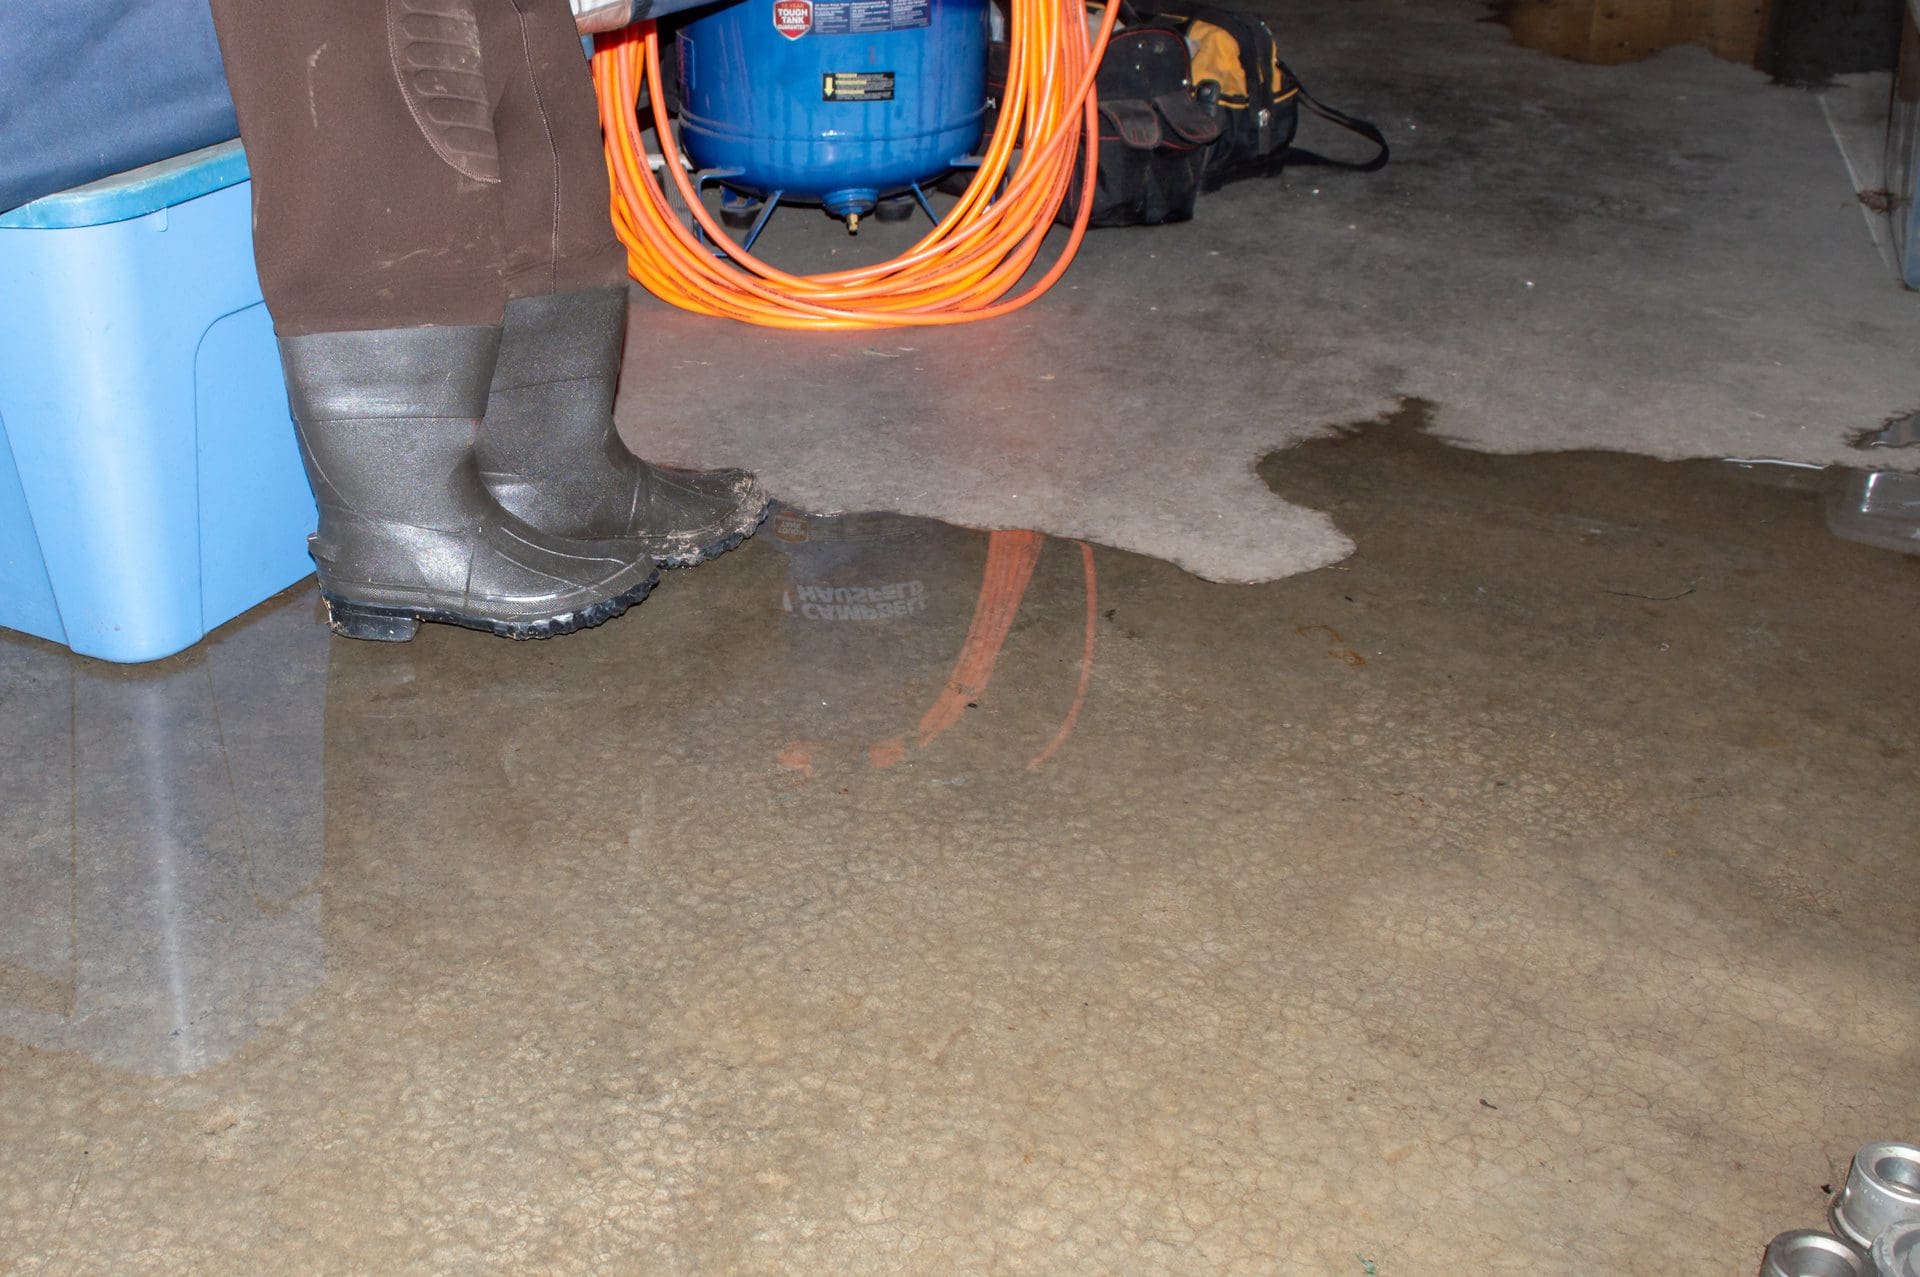 Überschwemmung, Rückstau, Starkregen - oft trifft es zuerst den Keller. Welche Versicherung zahlt dann? (© Diane / stock.adobe.com)